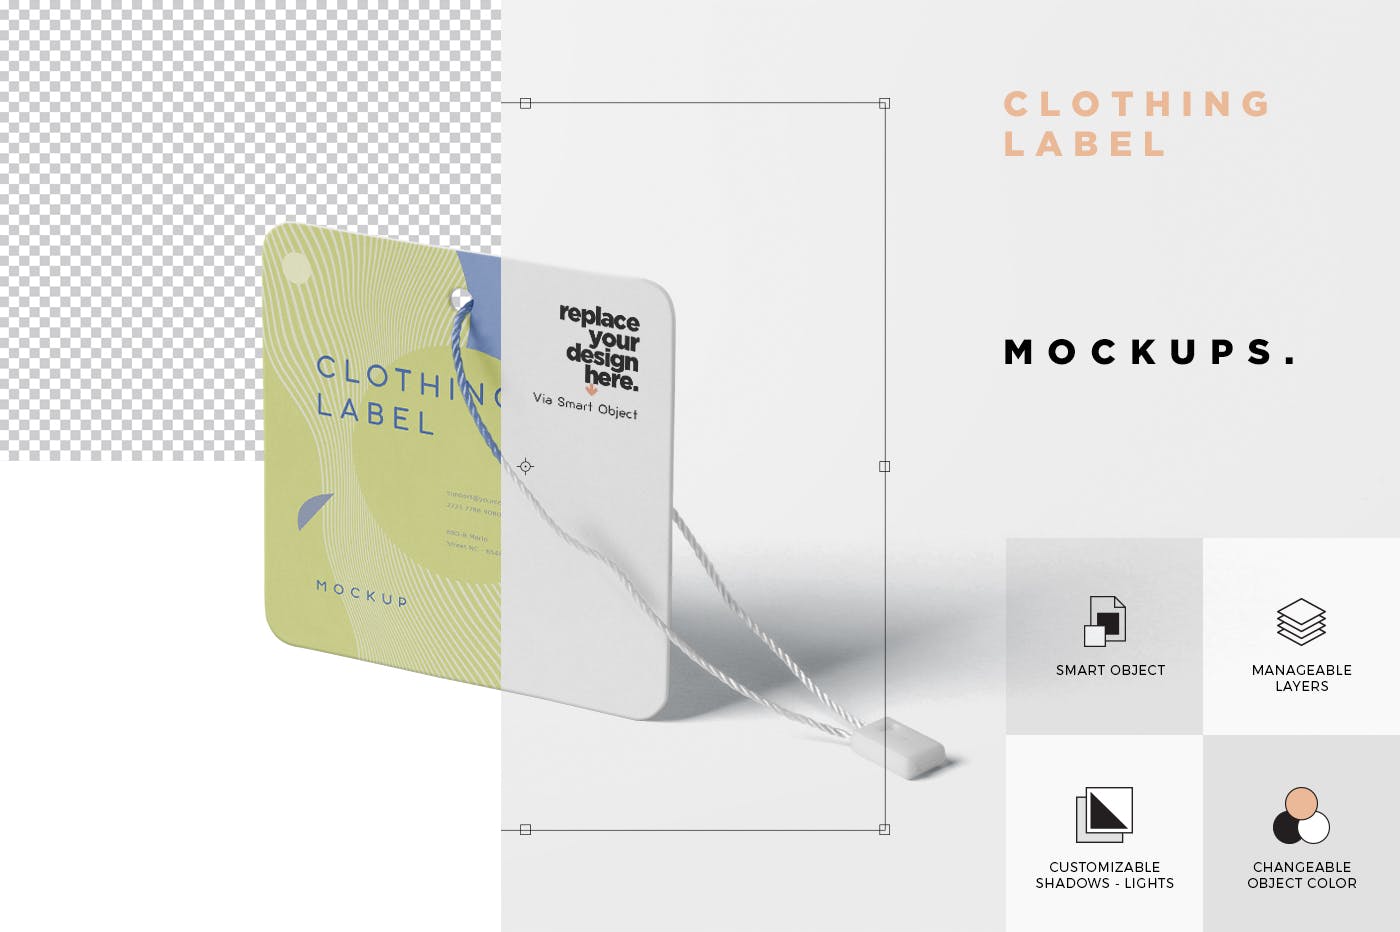 服装挂牌标签设计图样机模板 Clothing Label Mockups插图(6)